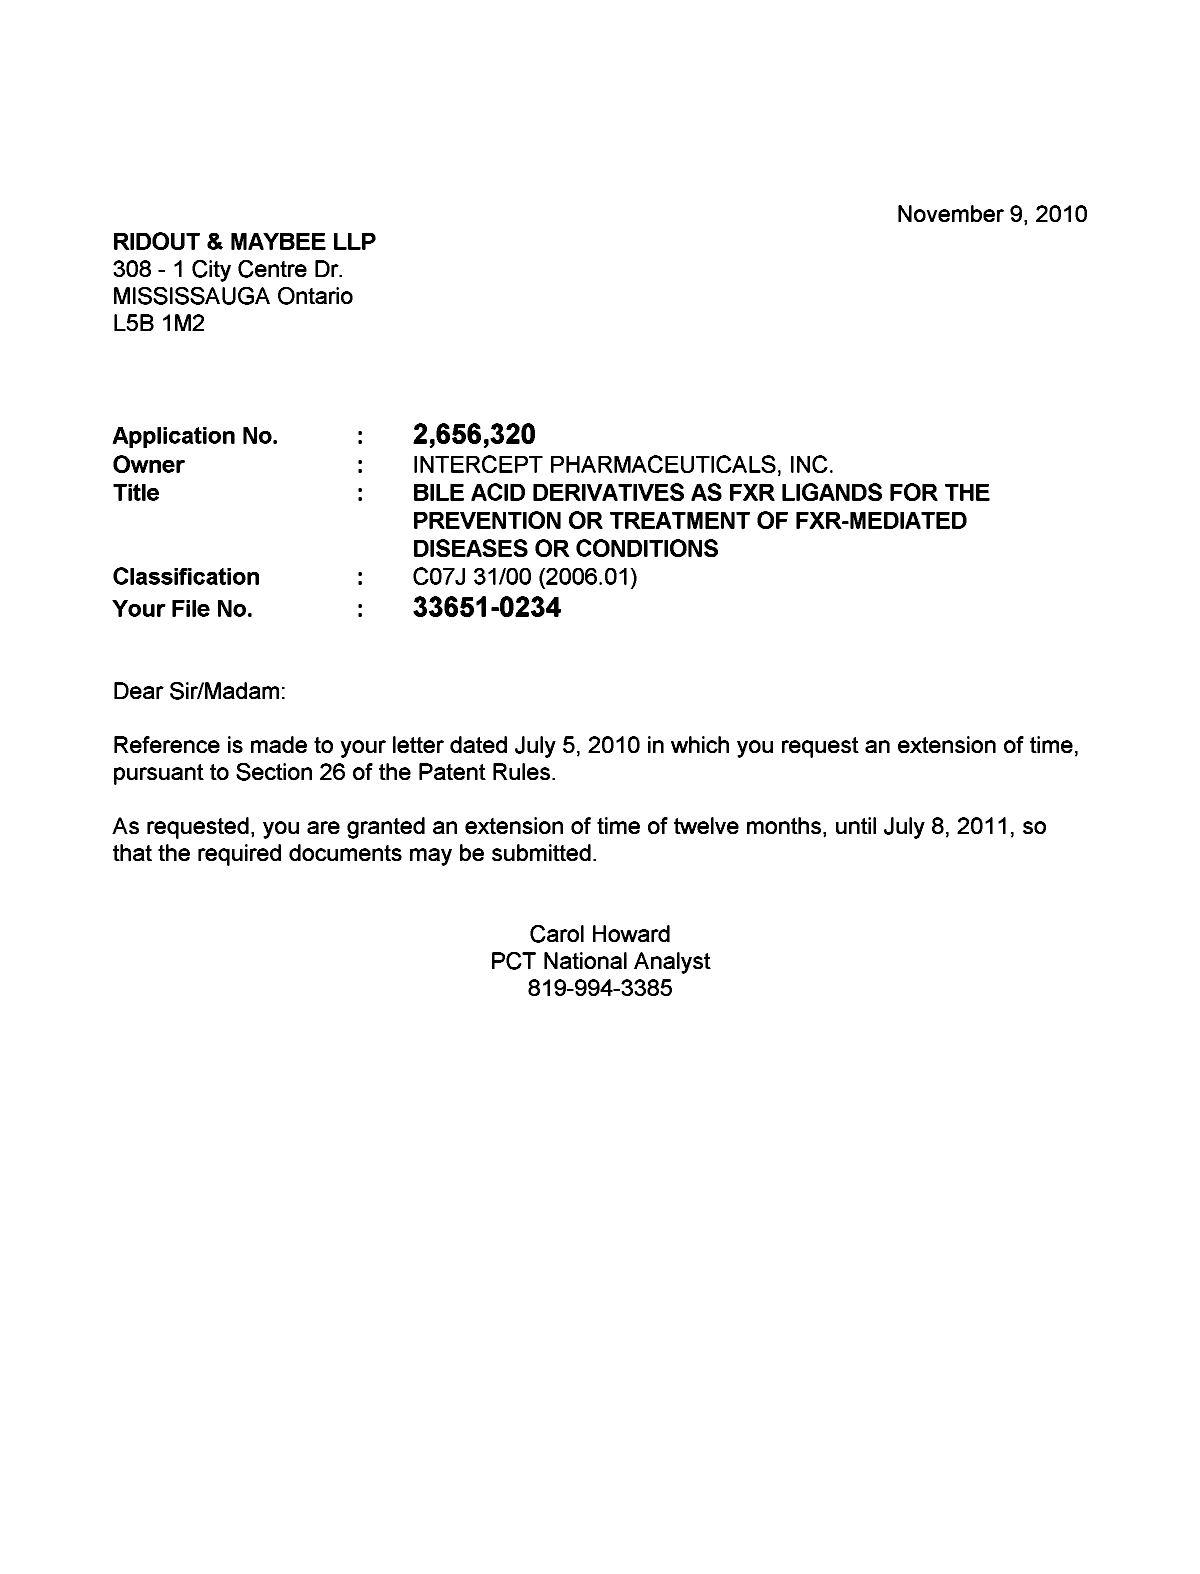 Canadian Patent Document 2656320. Correspondence 20101109. Image 1 of 1